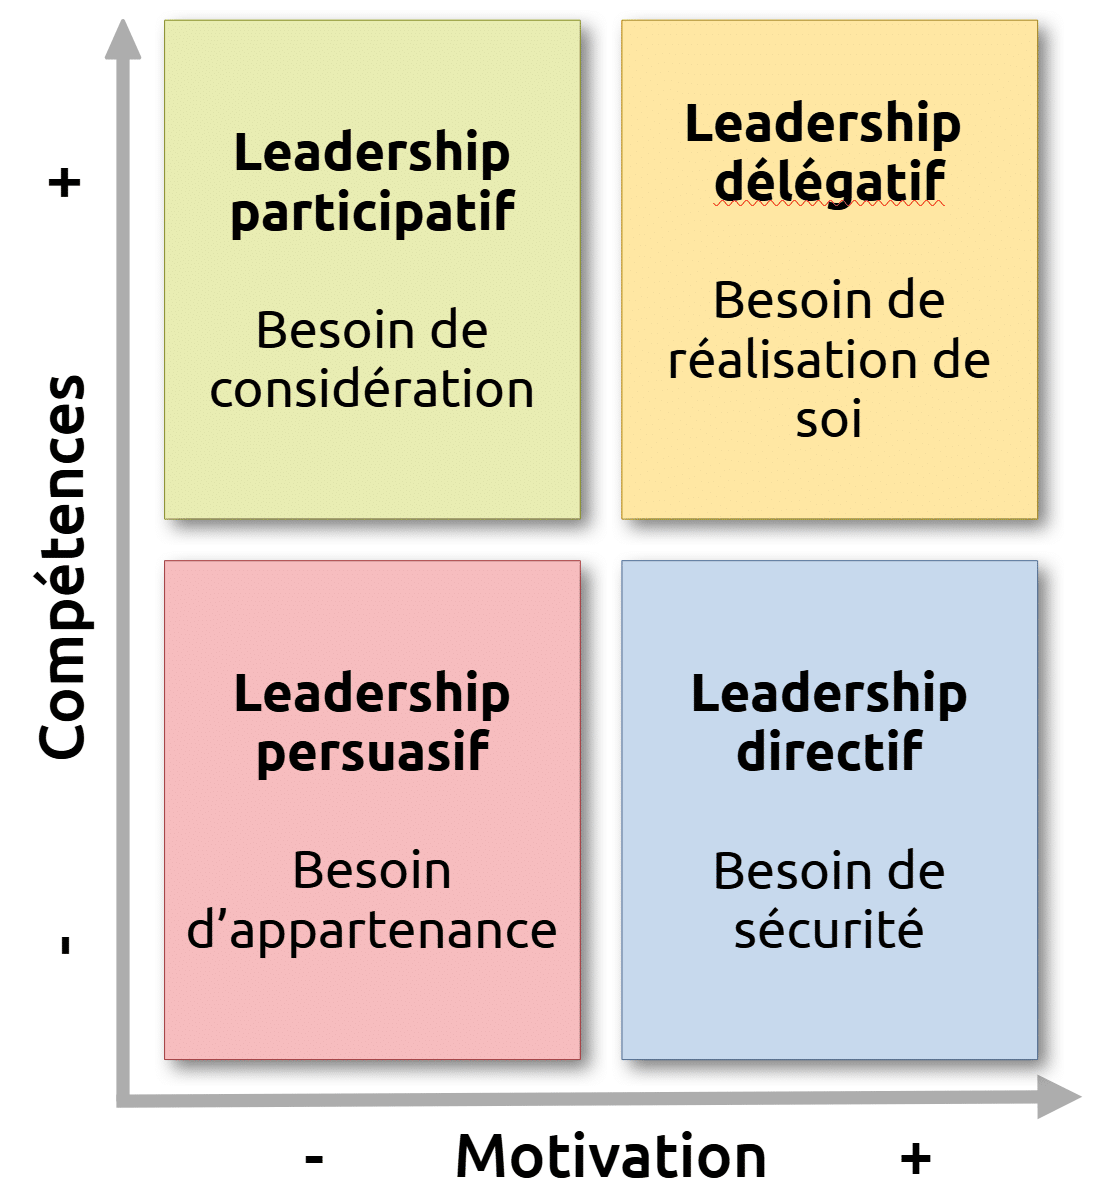 Les styles de leadership